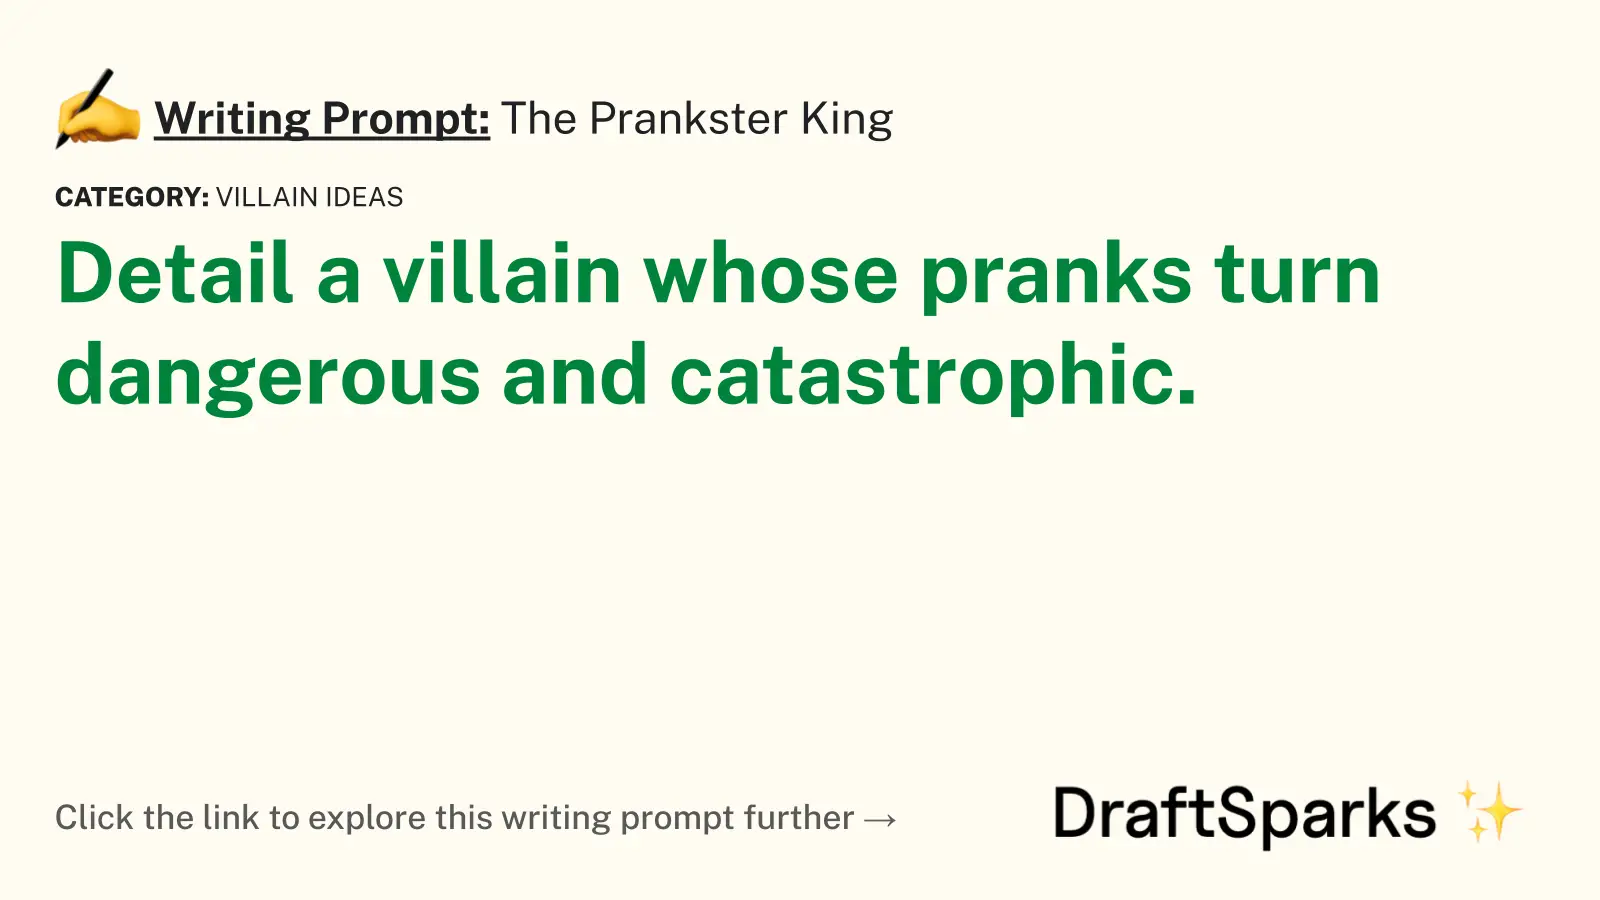 The Prankster King